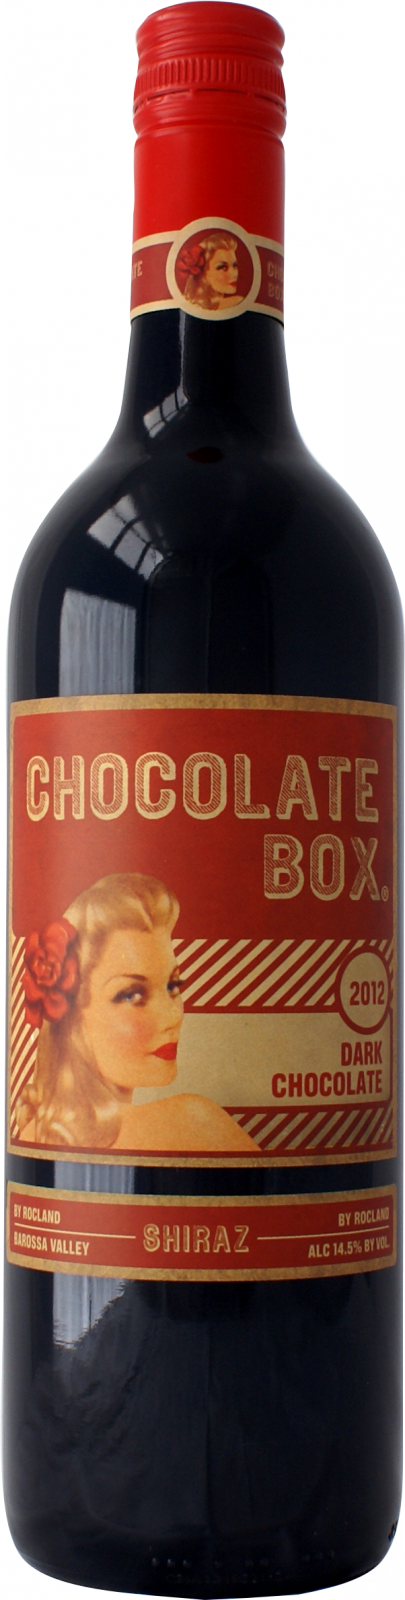 Chocolate Box - Shiraz - Barossa Valley 2012